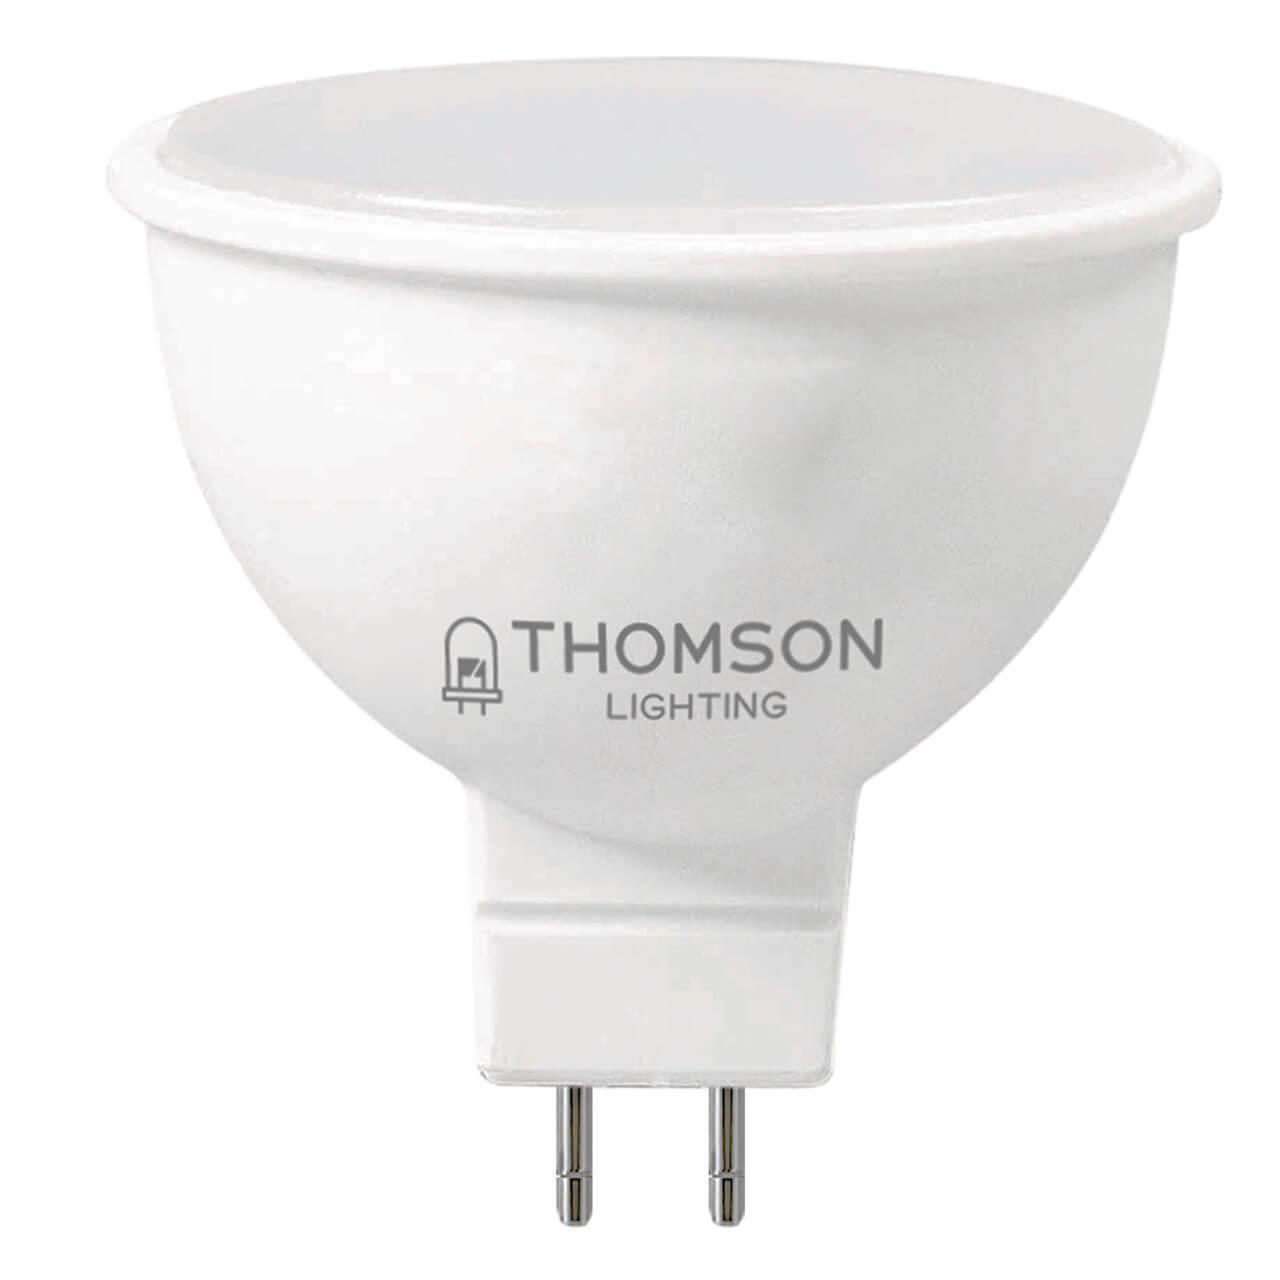 TH-B2324 Лампа светодиодная GU5.3 10W 6500K полусфера матовая Thomson